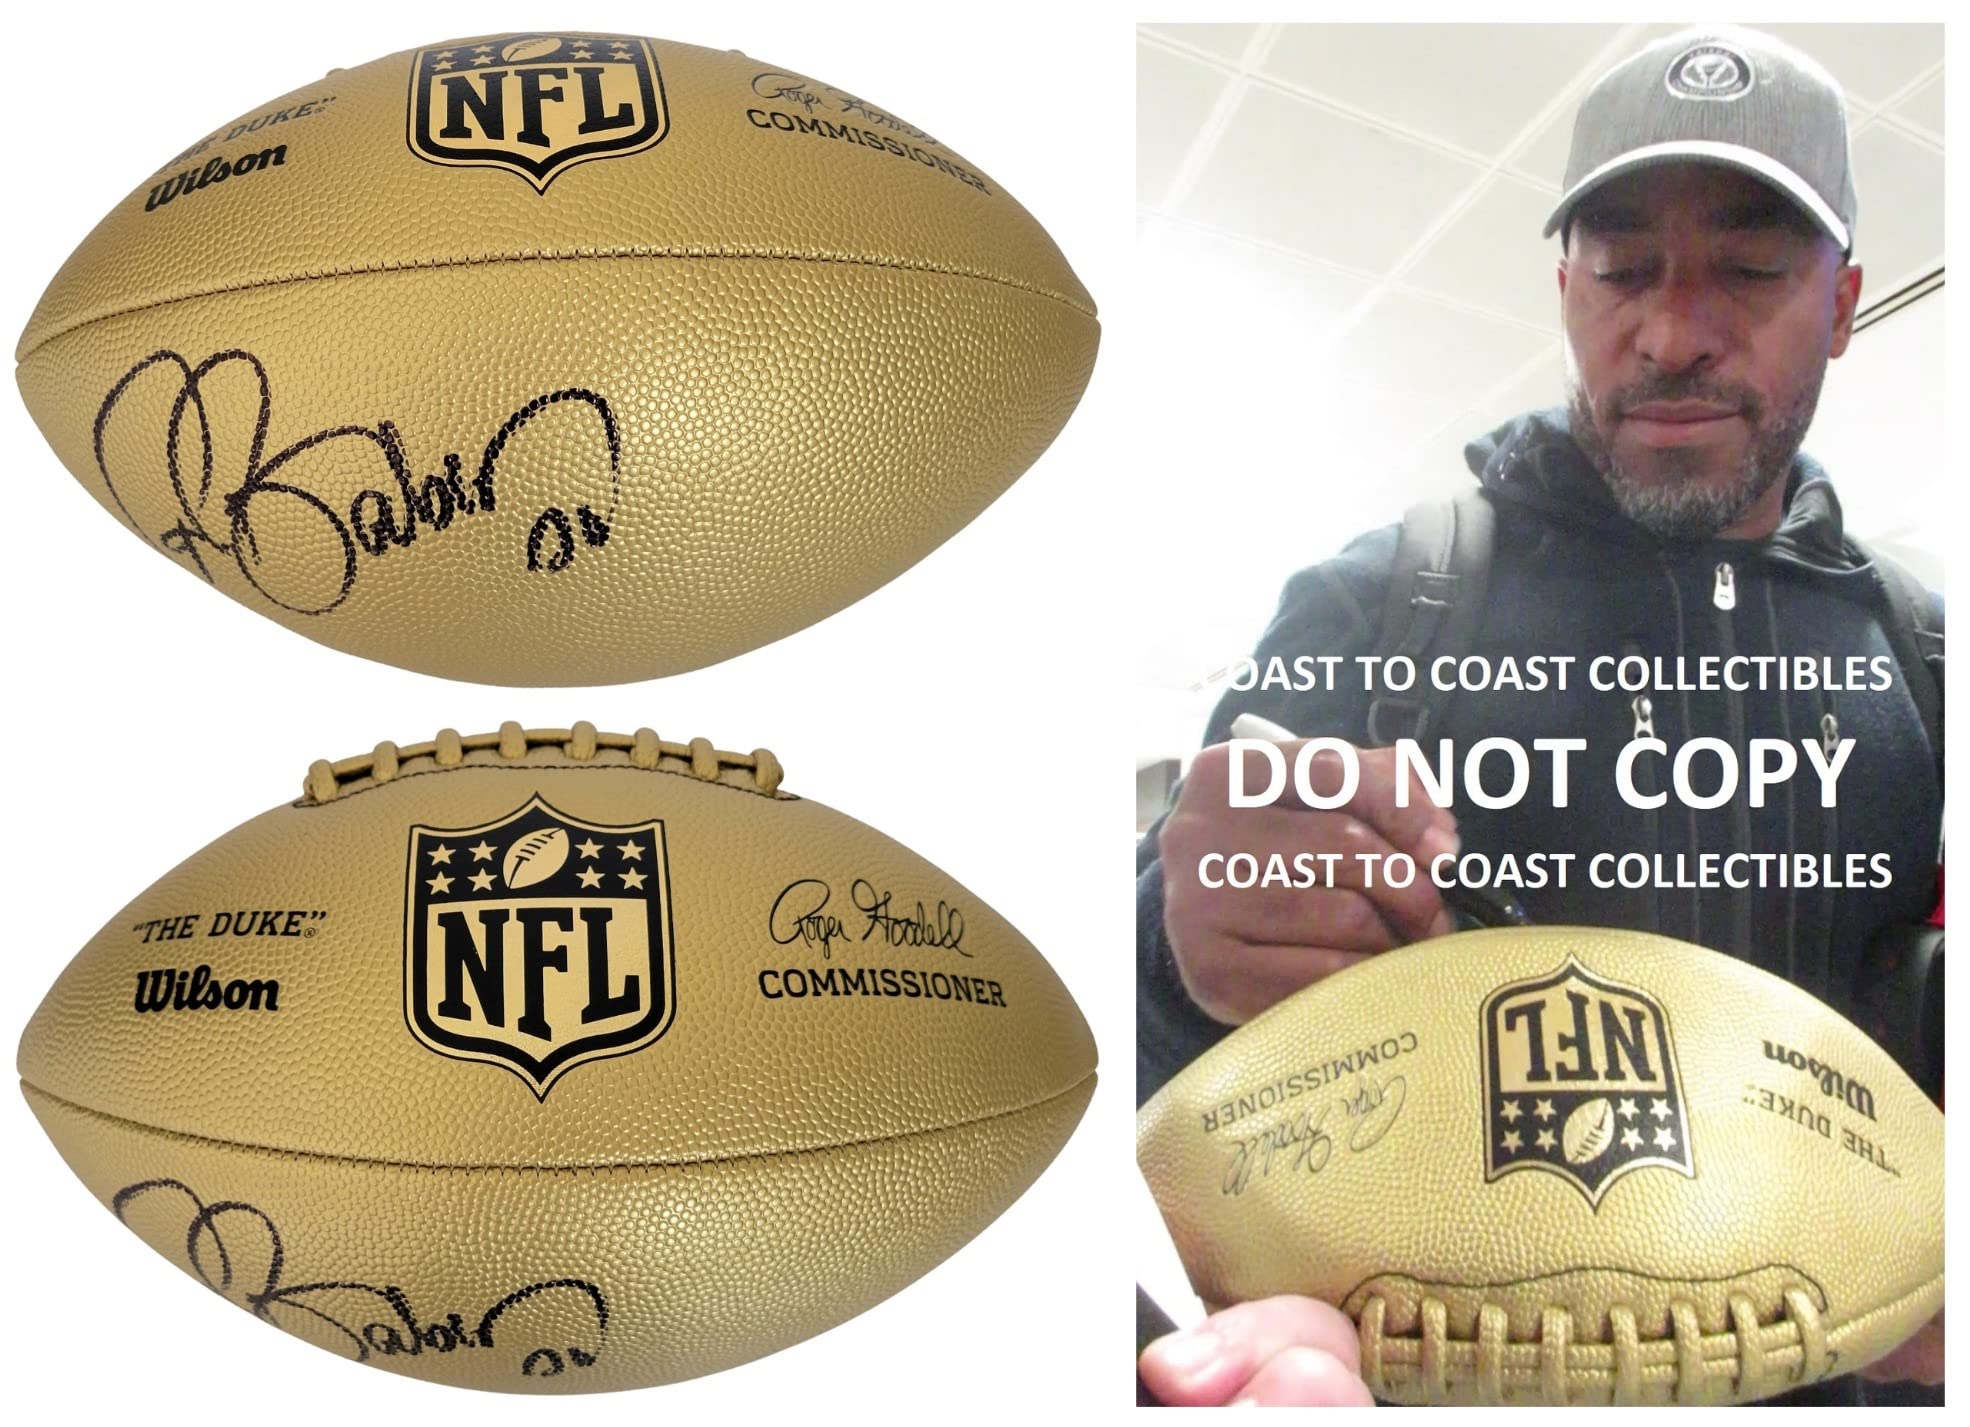 Ronde Barber Tampa Bay Buccaneers signed Gold NFL football proof COA  autographed - Coast to Coast Collectibles Memorabilia -  #sports_memorabilia# - #entertainment_memorabilia#